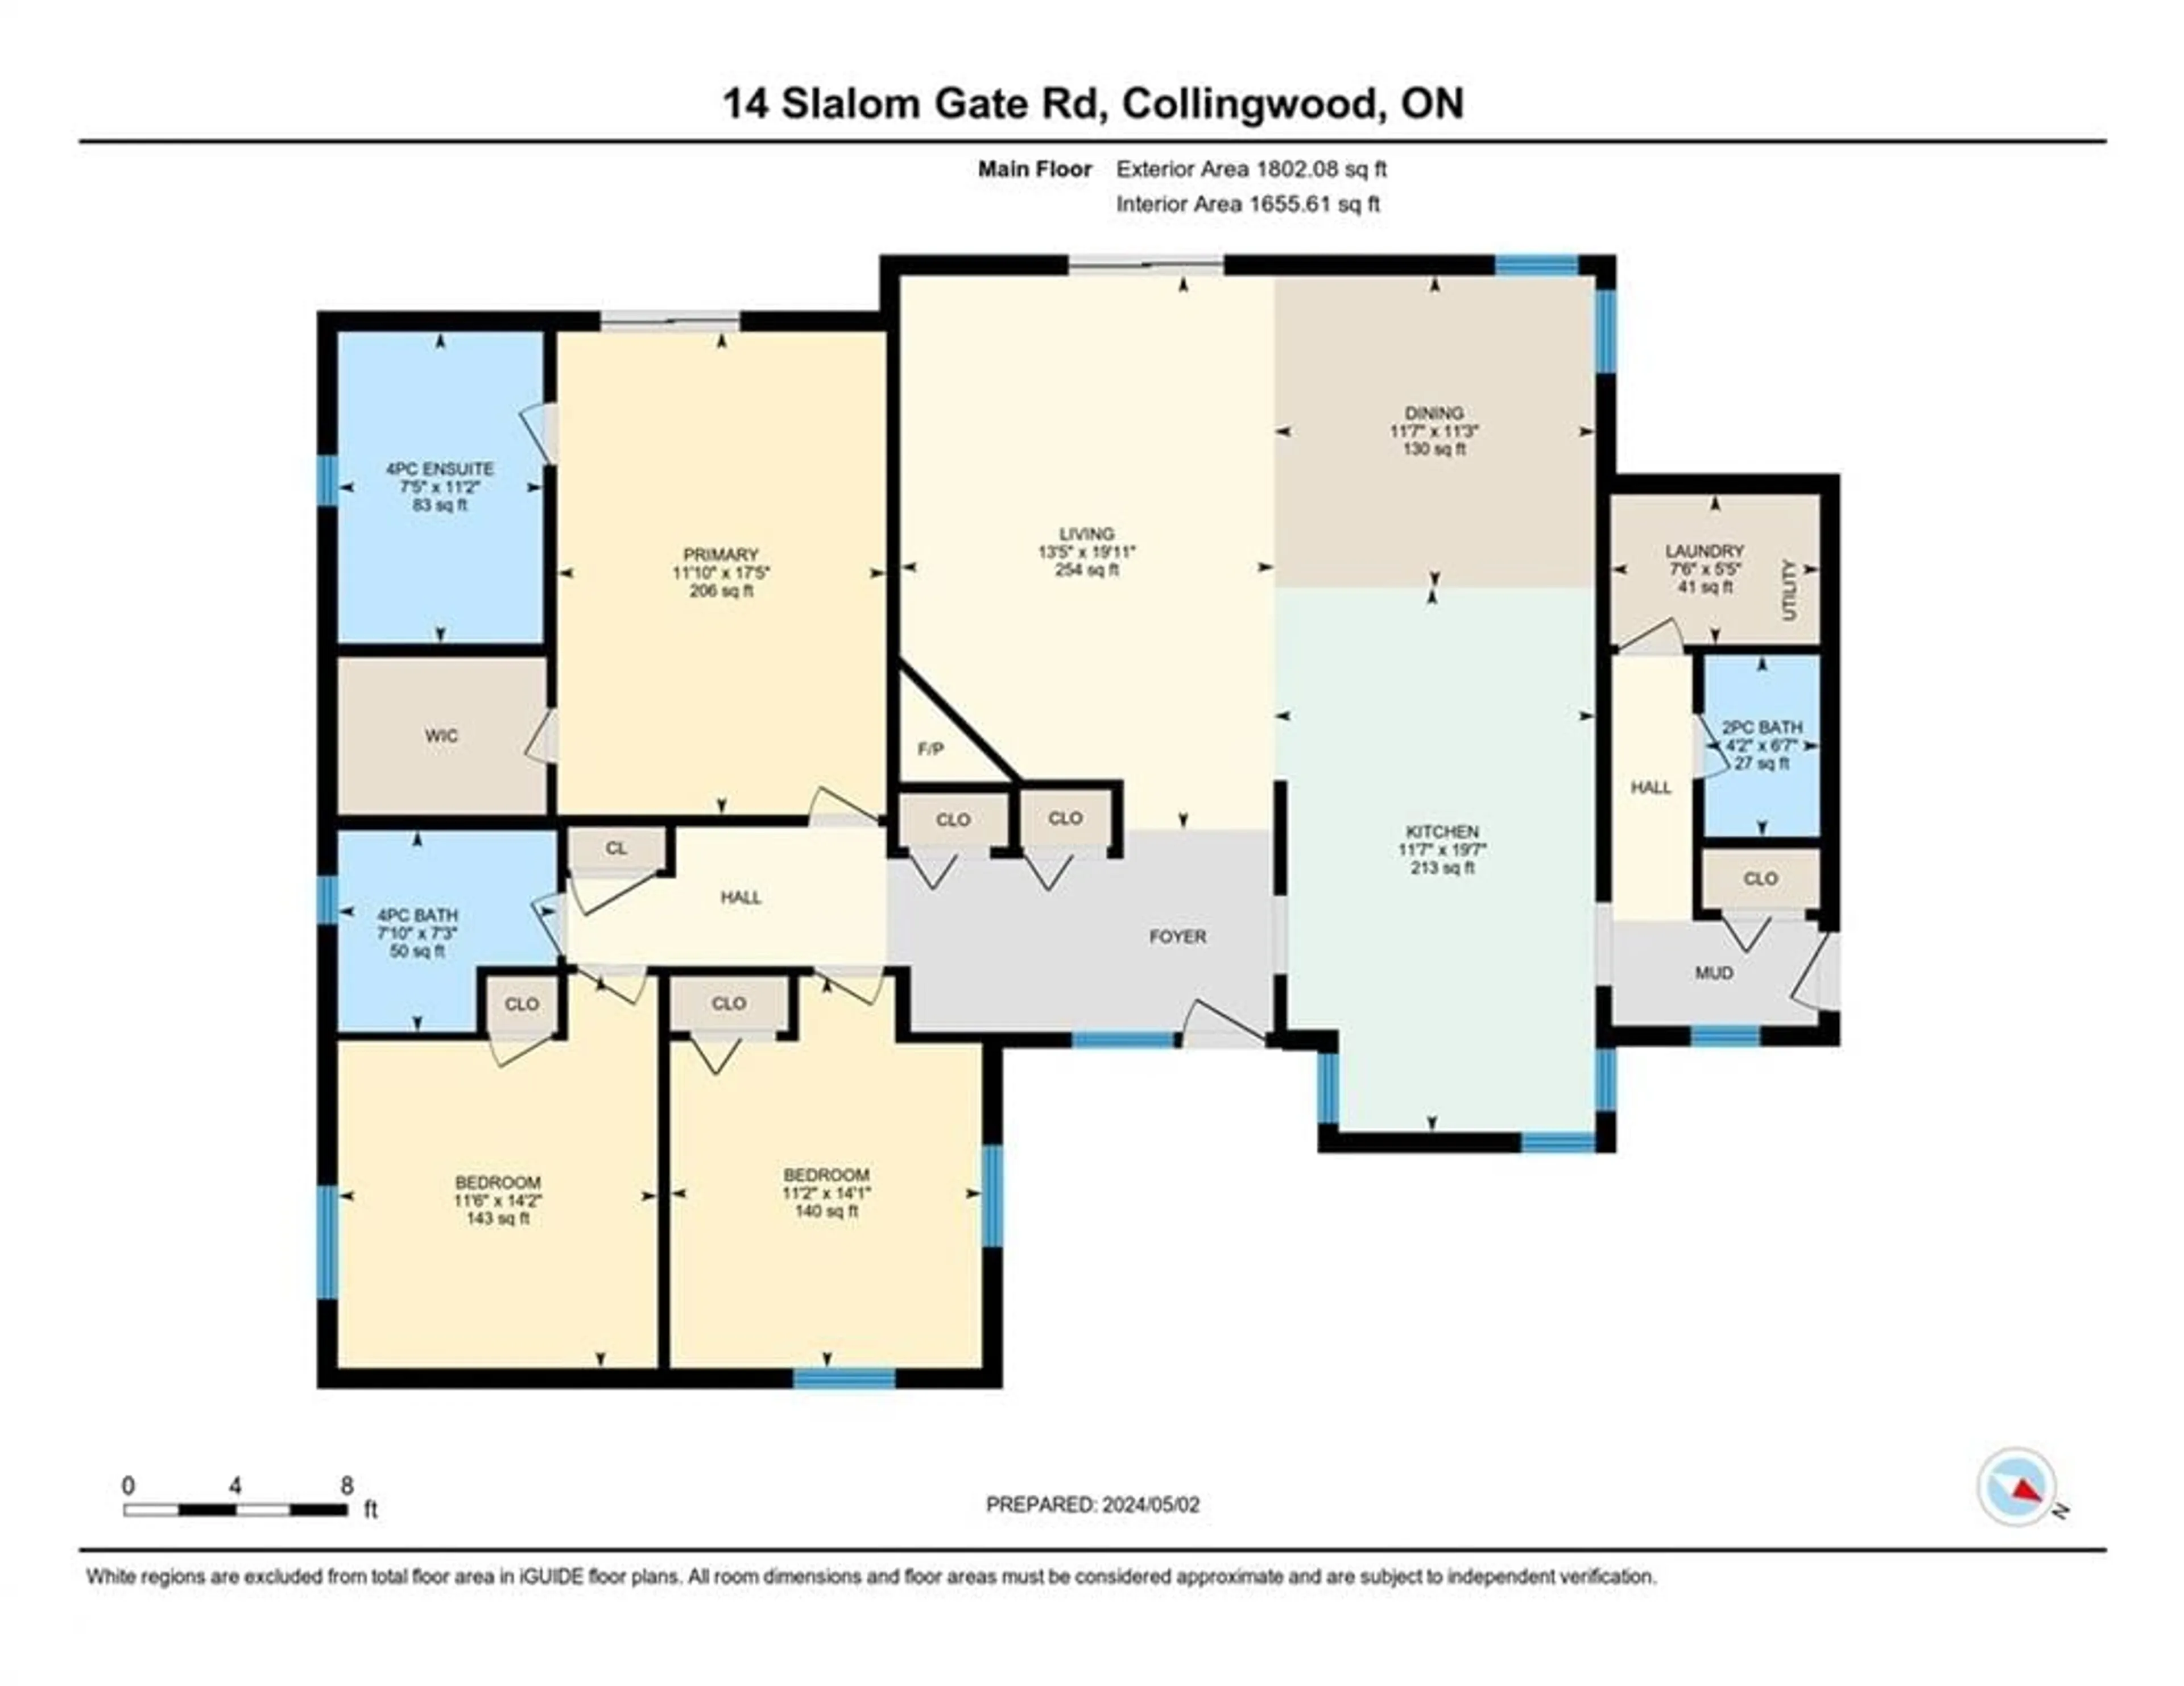 Floor plan for 14 Slalom Gate Rd, Collingwood Ontario L9Y 5A9